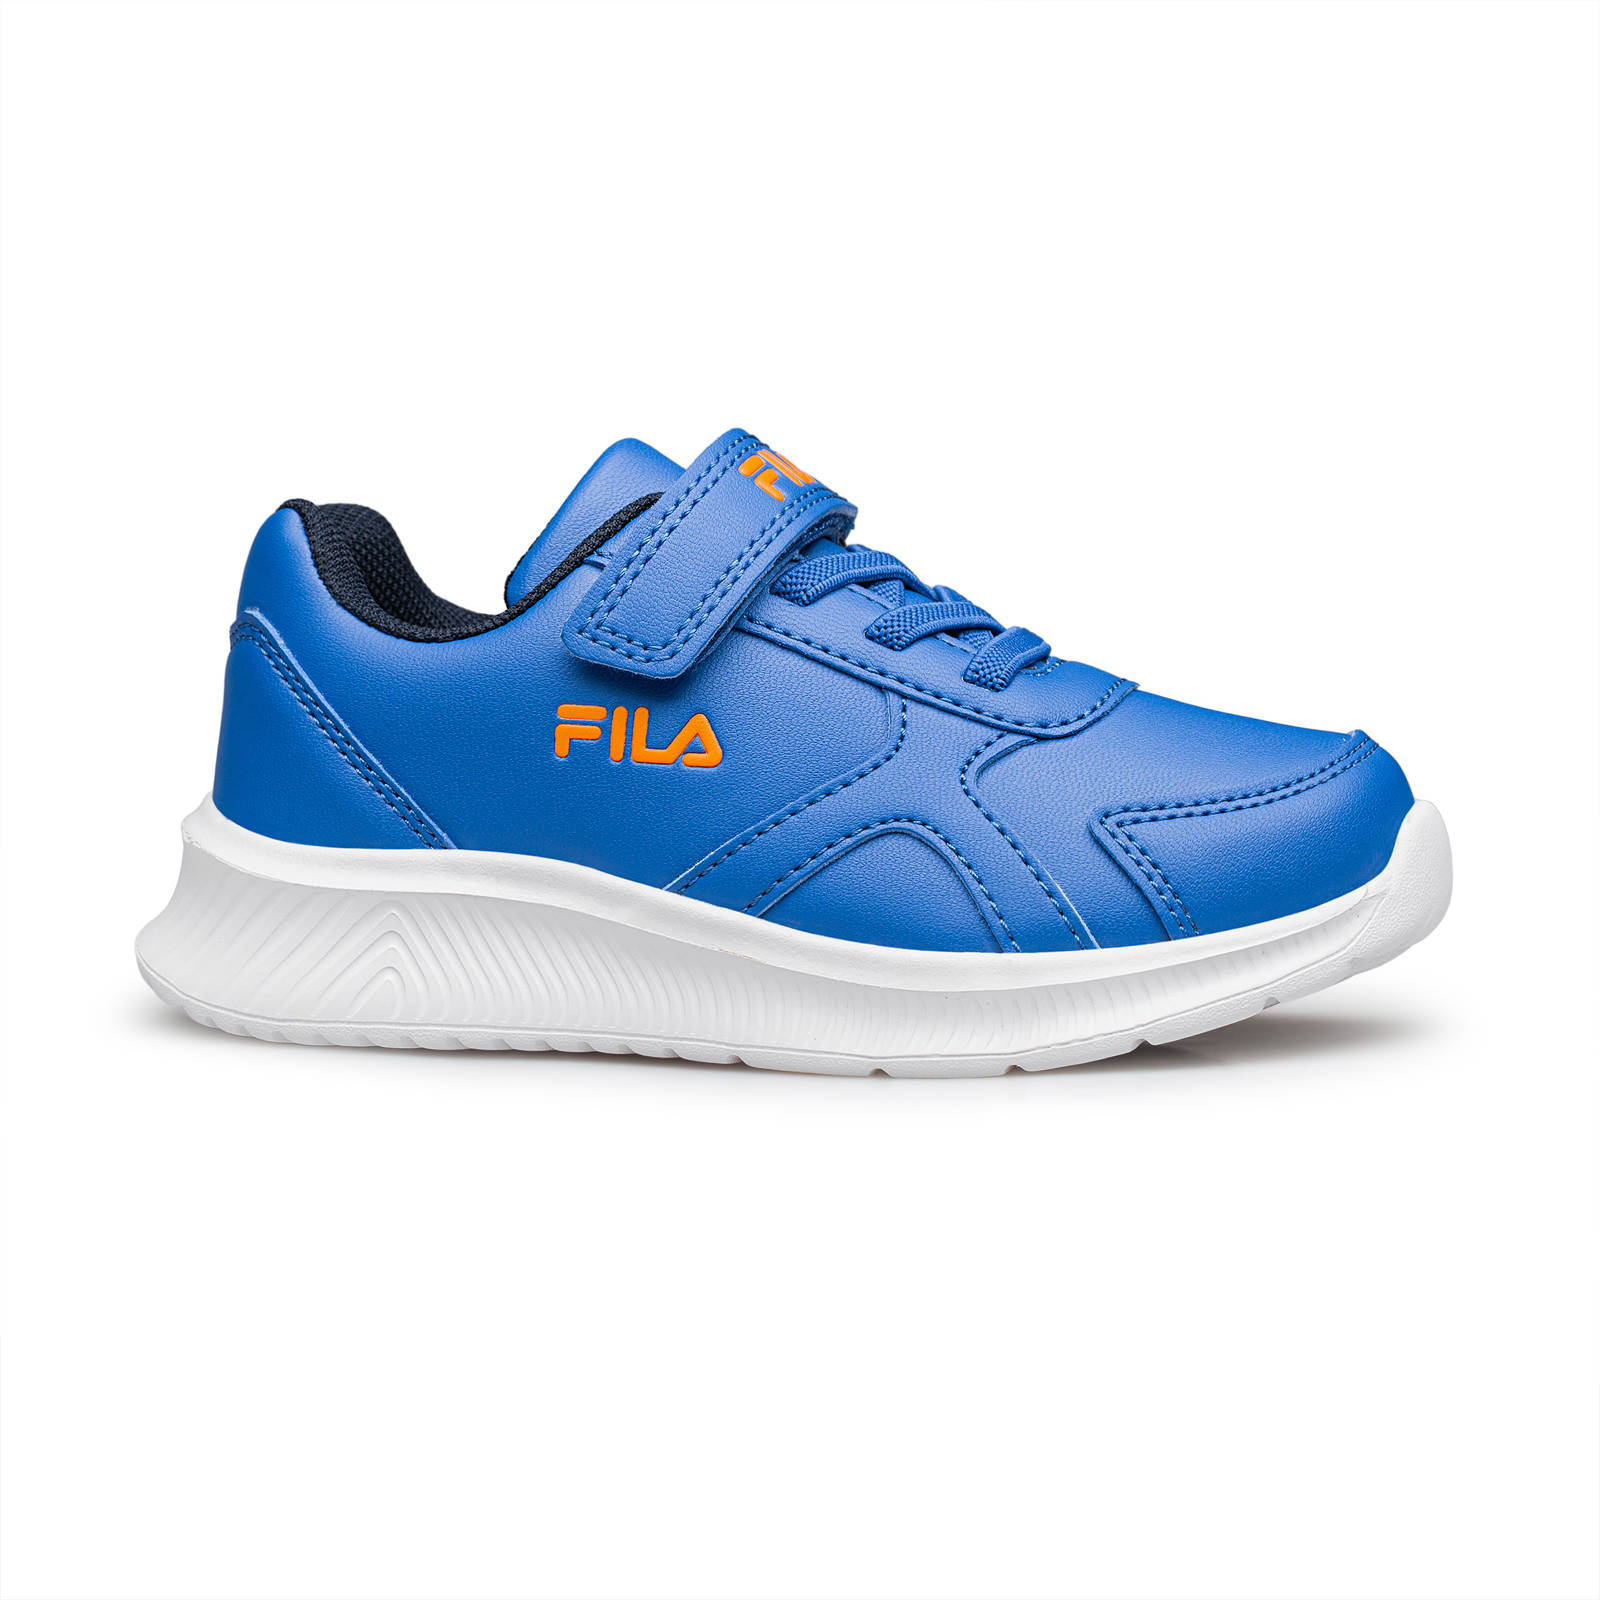 Fila - BRETT 4 V FOOTWEAR - LIGHT ROYAL BLUE DEEP ORANGE Παιδικά > Παπούτσια > Αθλητικά > Παπούτσι Low Cut